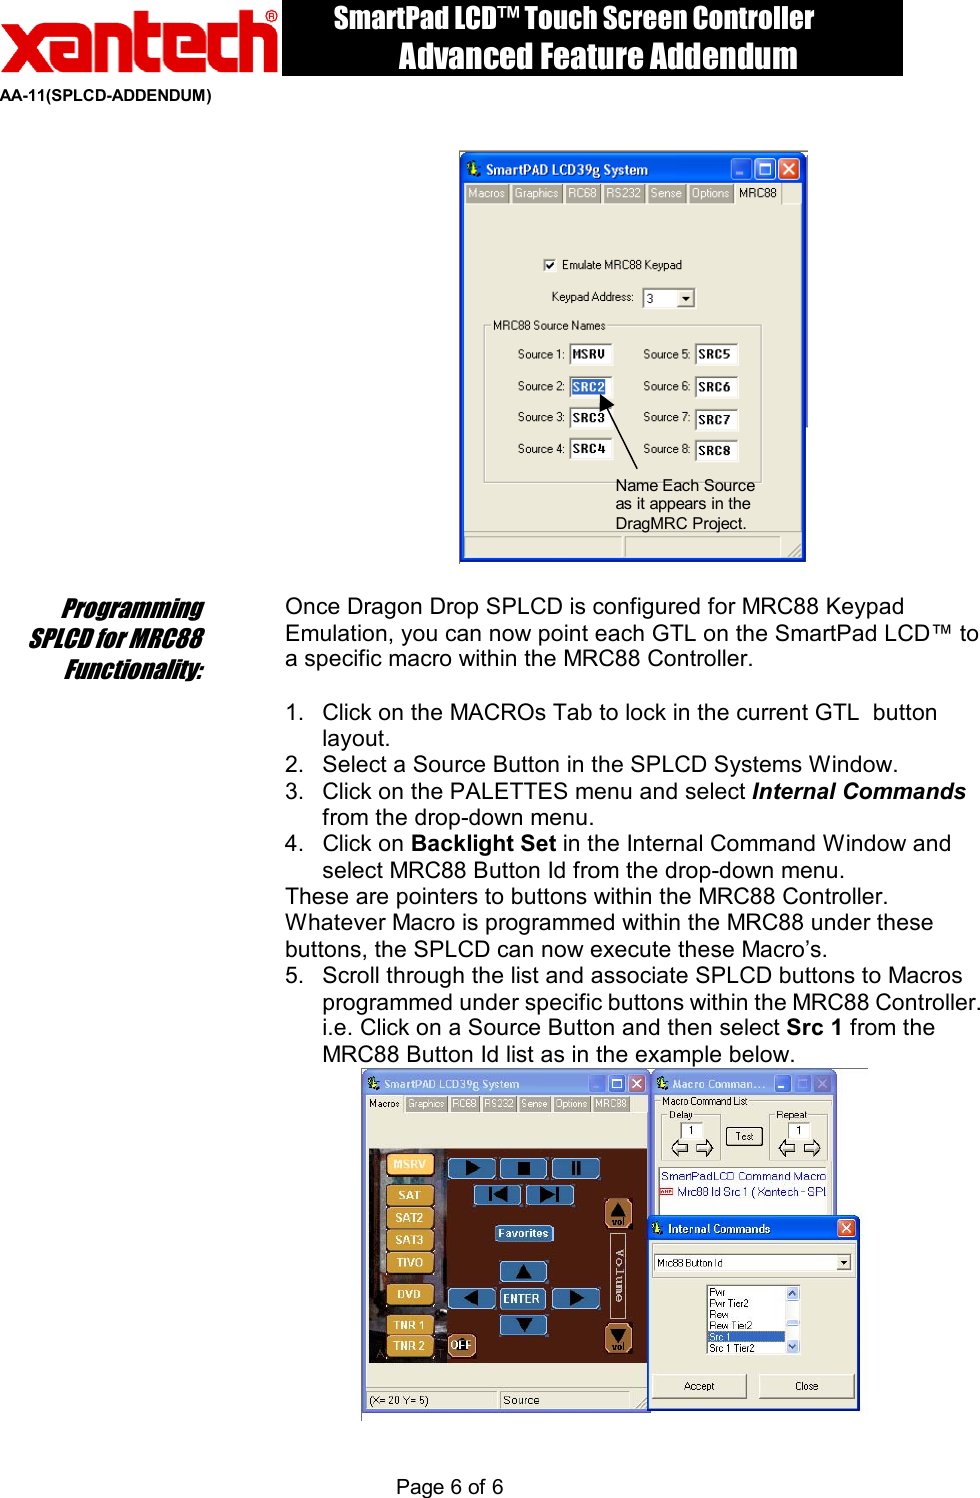 Page 6 of 10 - 18 A Aa11-Splcd-Adv-Prgm-Addendum-R2 - SPLCD-ADV-PRGM-ADDENDUM-R2 User Manual